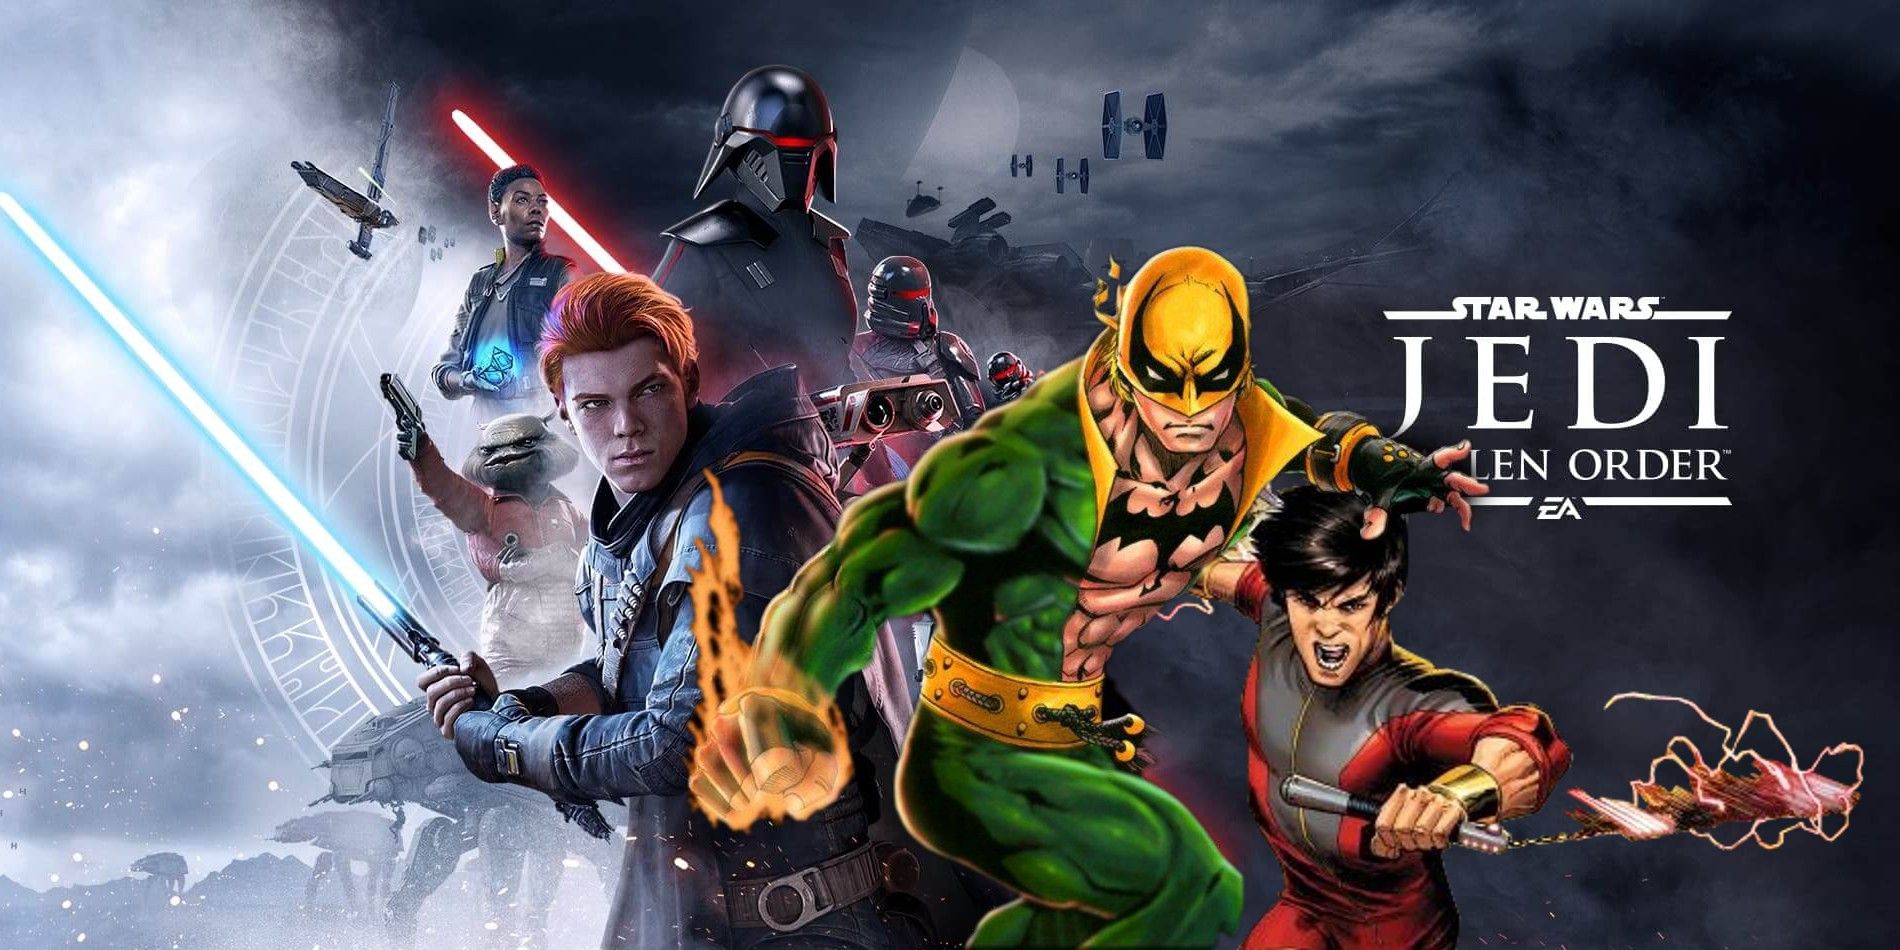 Star Wars Jedi: Fallen Order proves that Marvel should embrace the Soulslike gameplay.